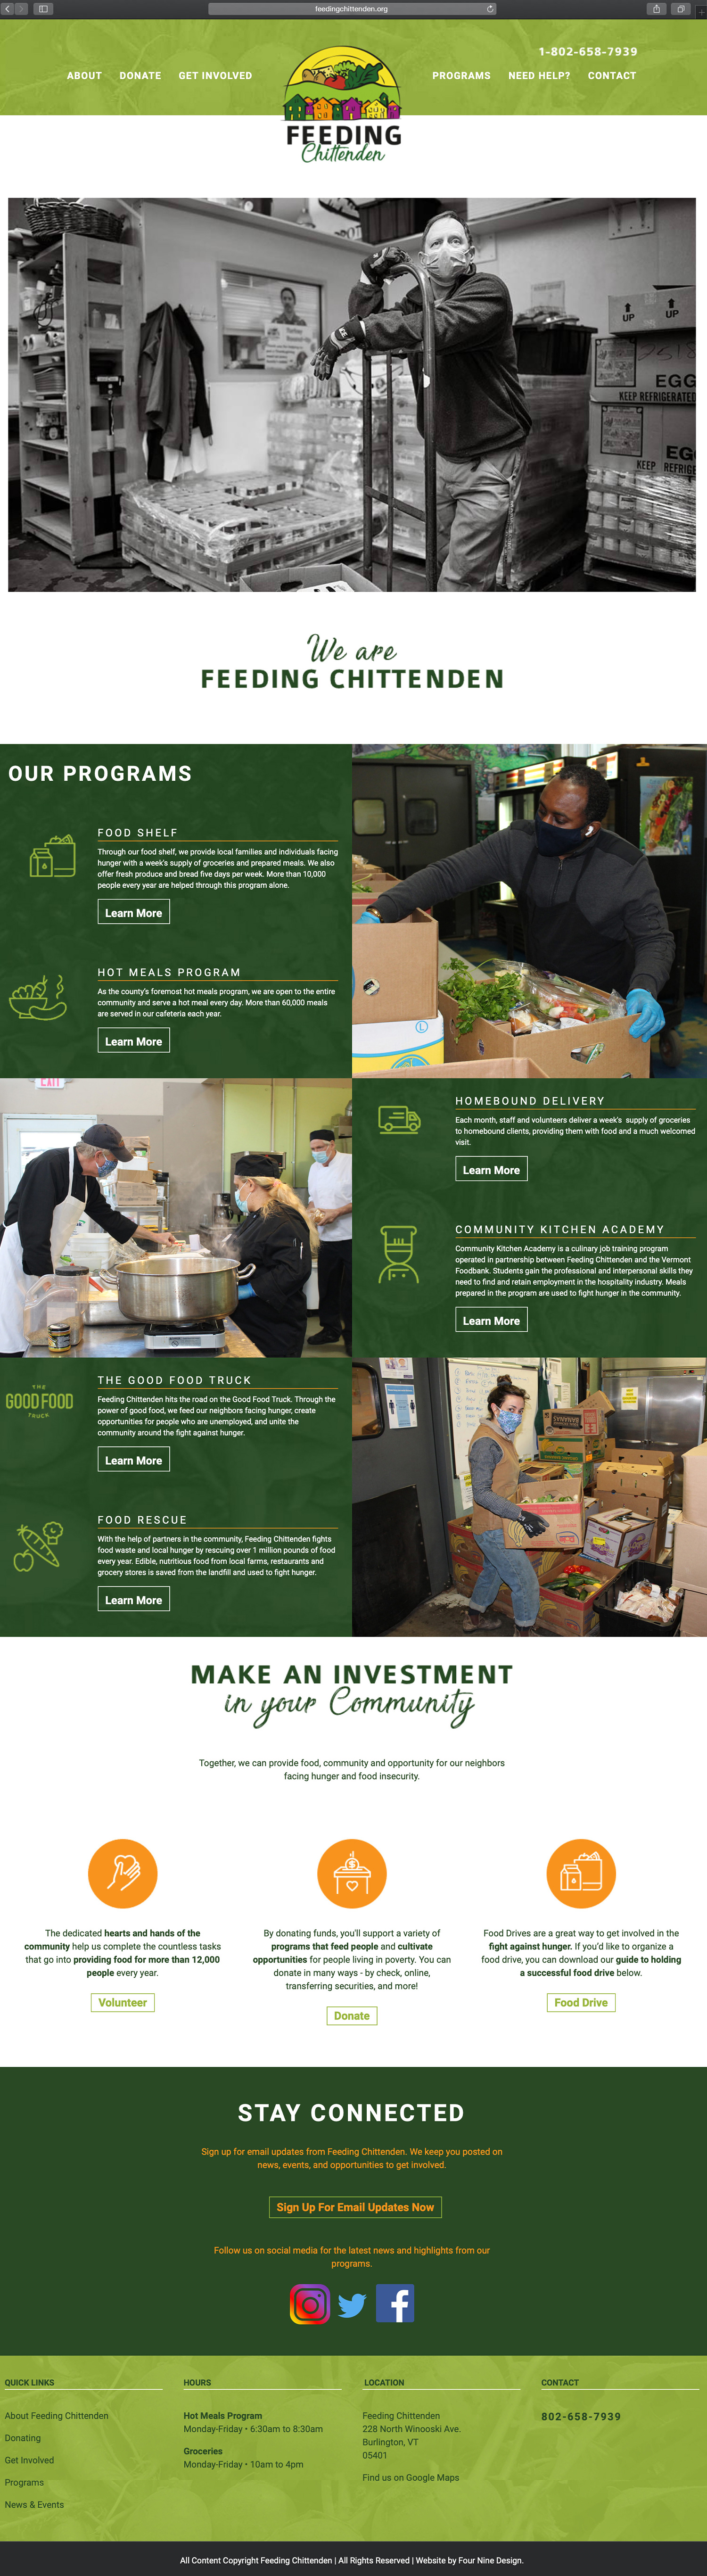 Website design and website development for Feeding Chittenden - homepage view.